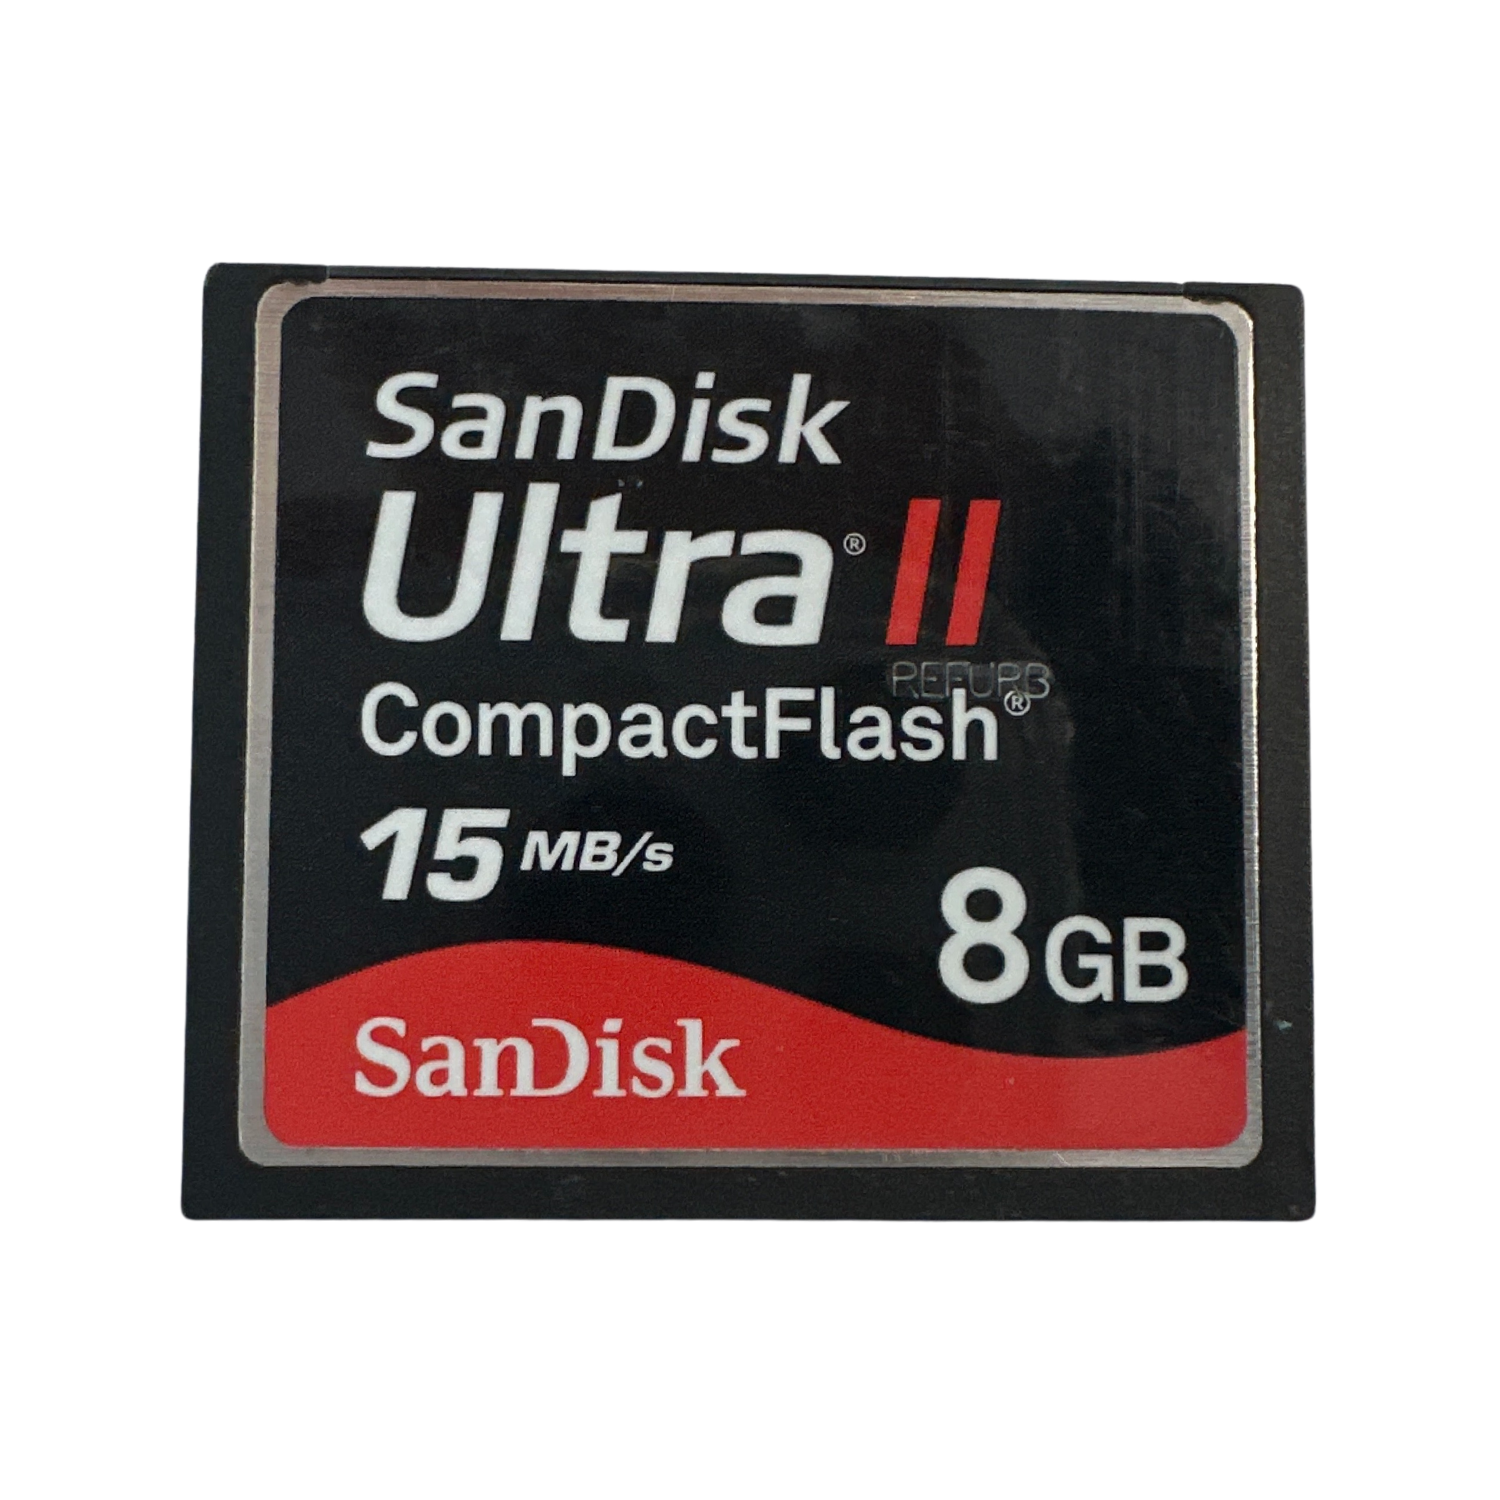 SanDisk ULTRA II 8GB CF Compact Flash Card SDCFH-8192/SDCFH-008G (Certified Refurbished)